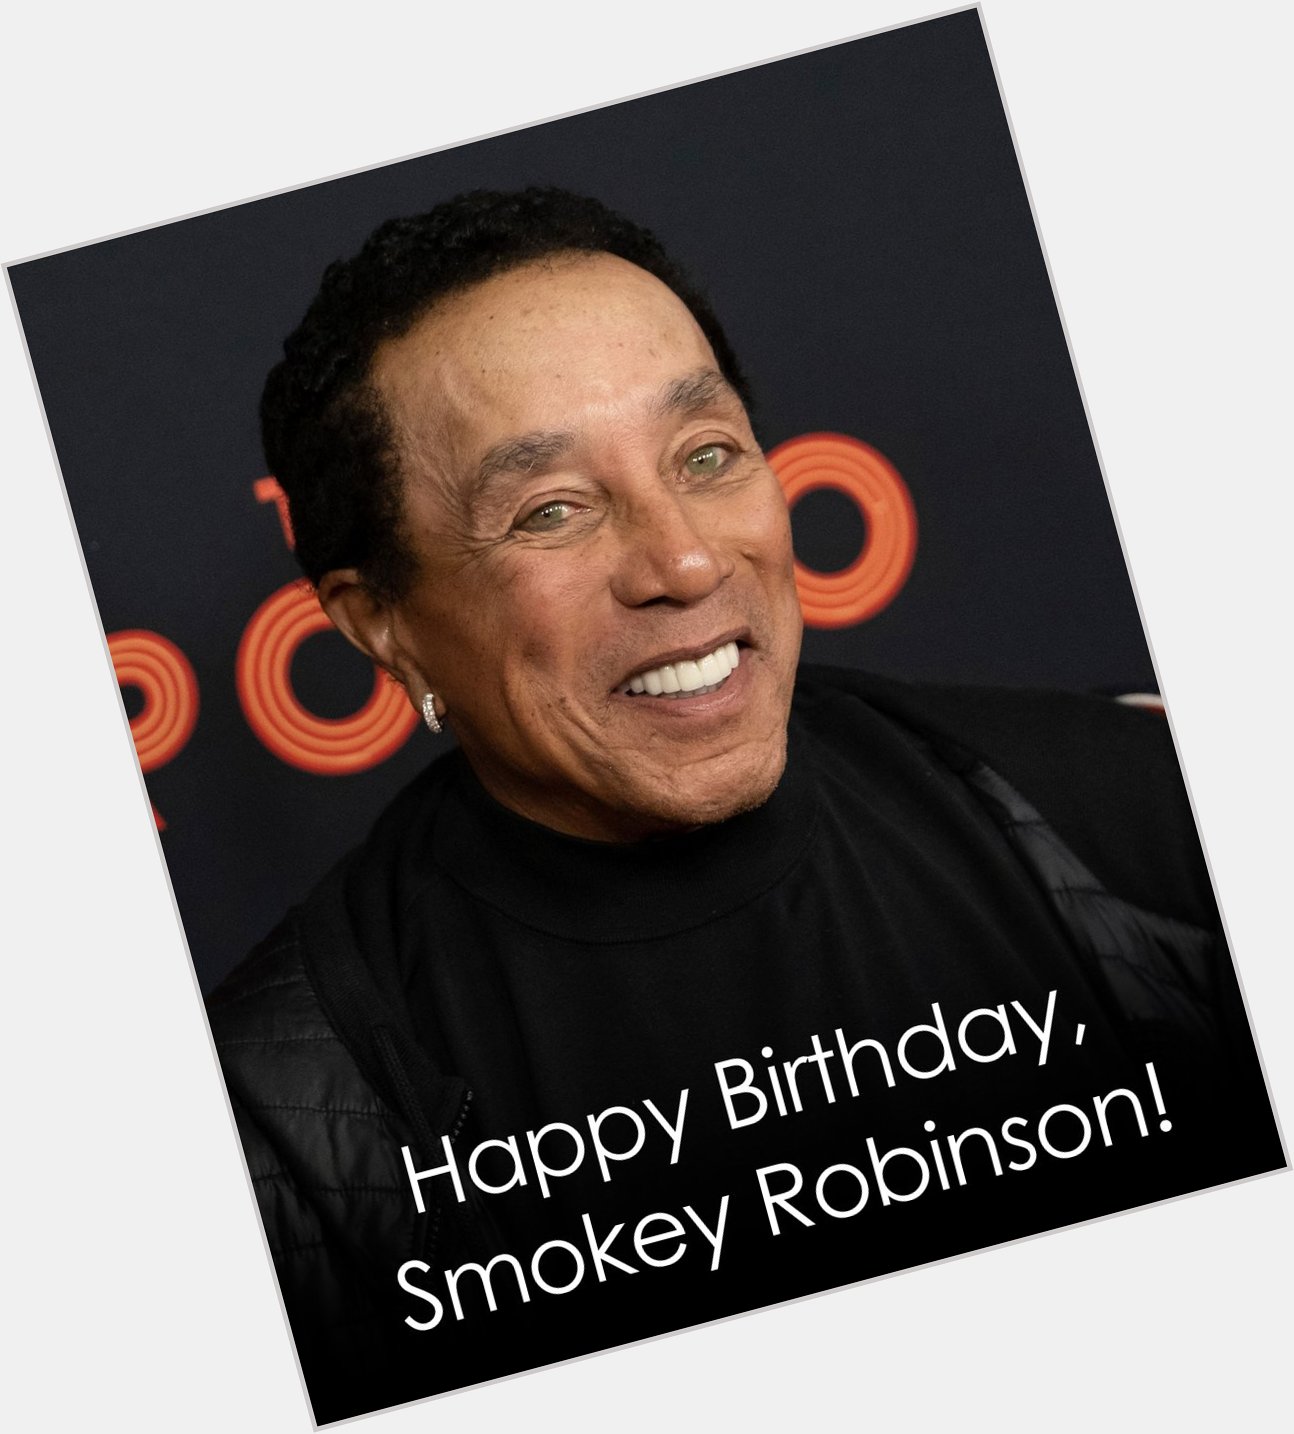 Happy birthday to Smokey Robinson!   The singer-songwriter turns 82 today.   